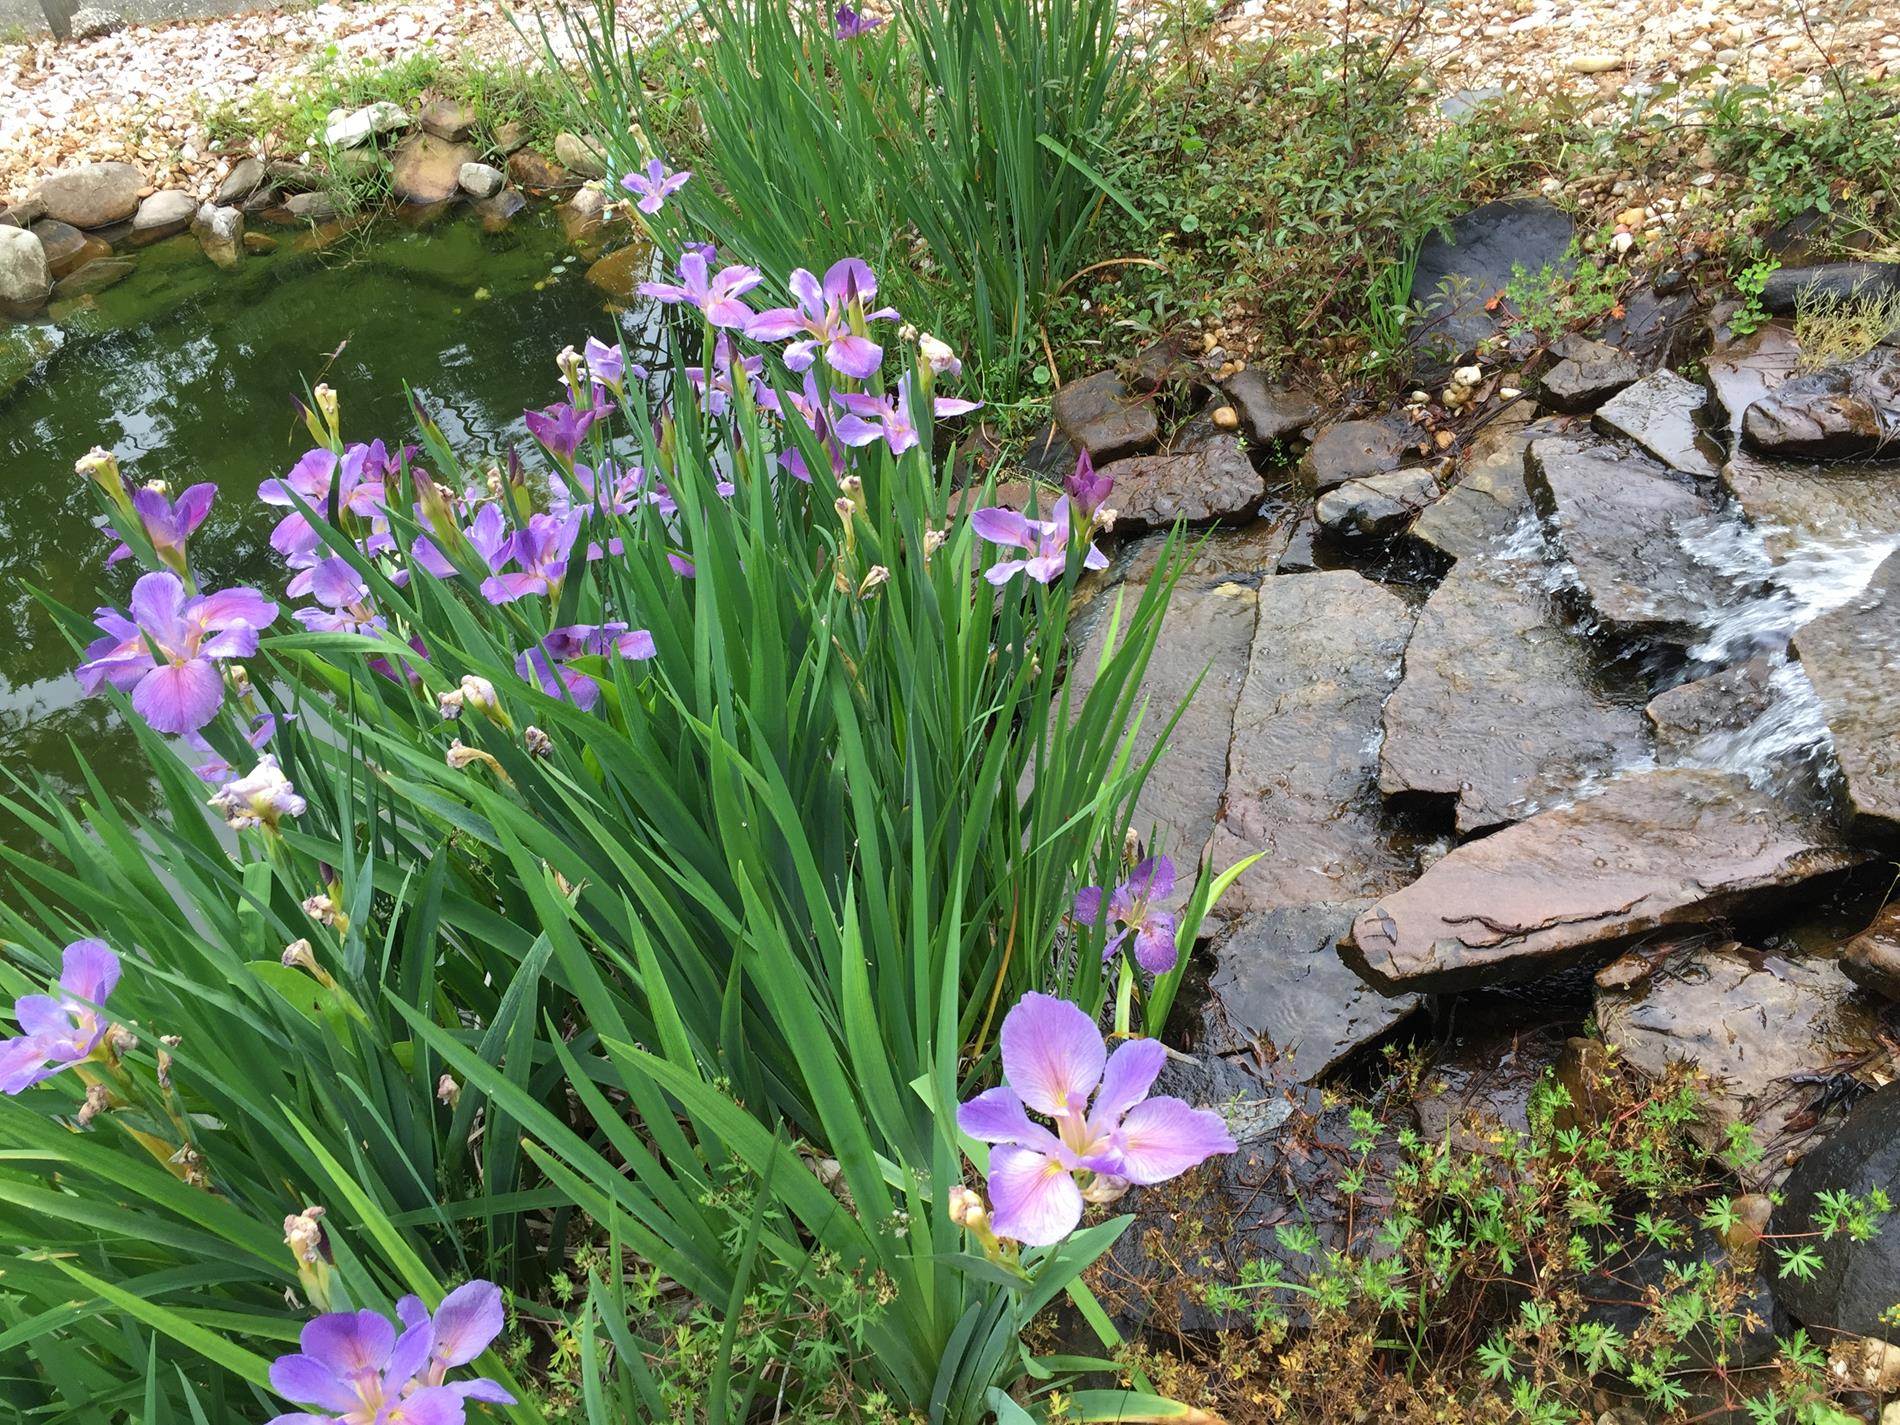 blue flag irises and pond